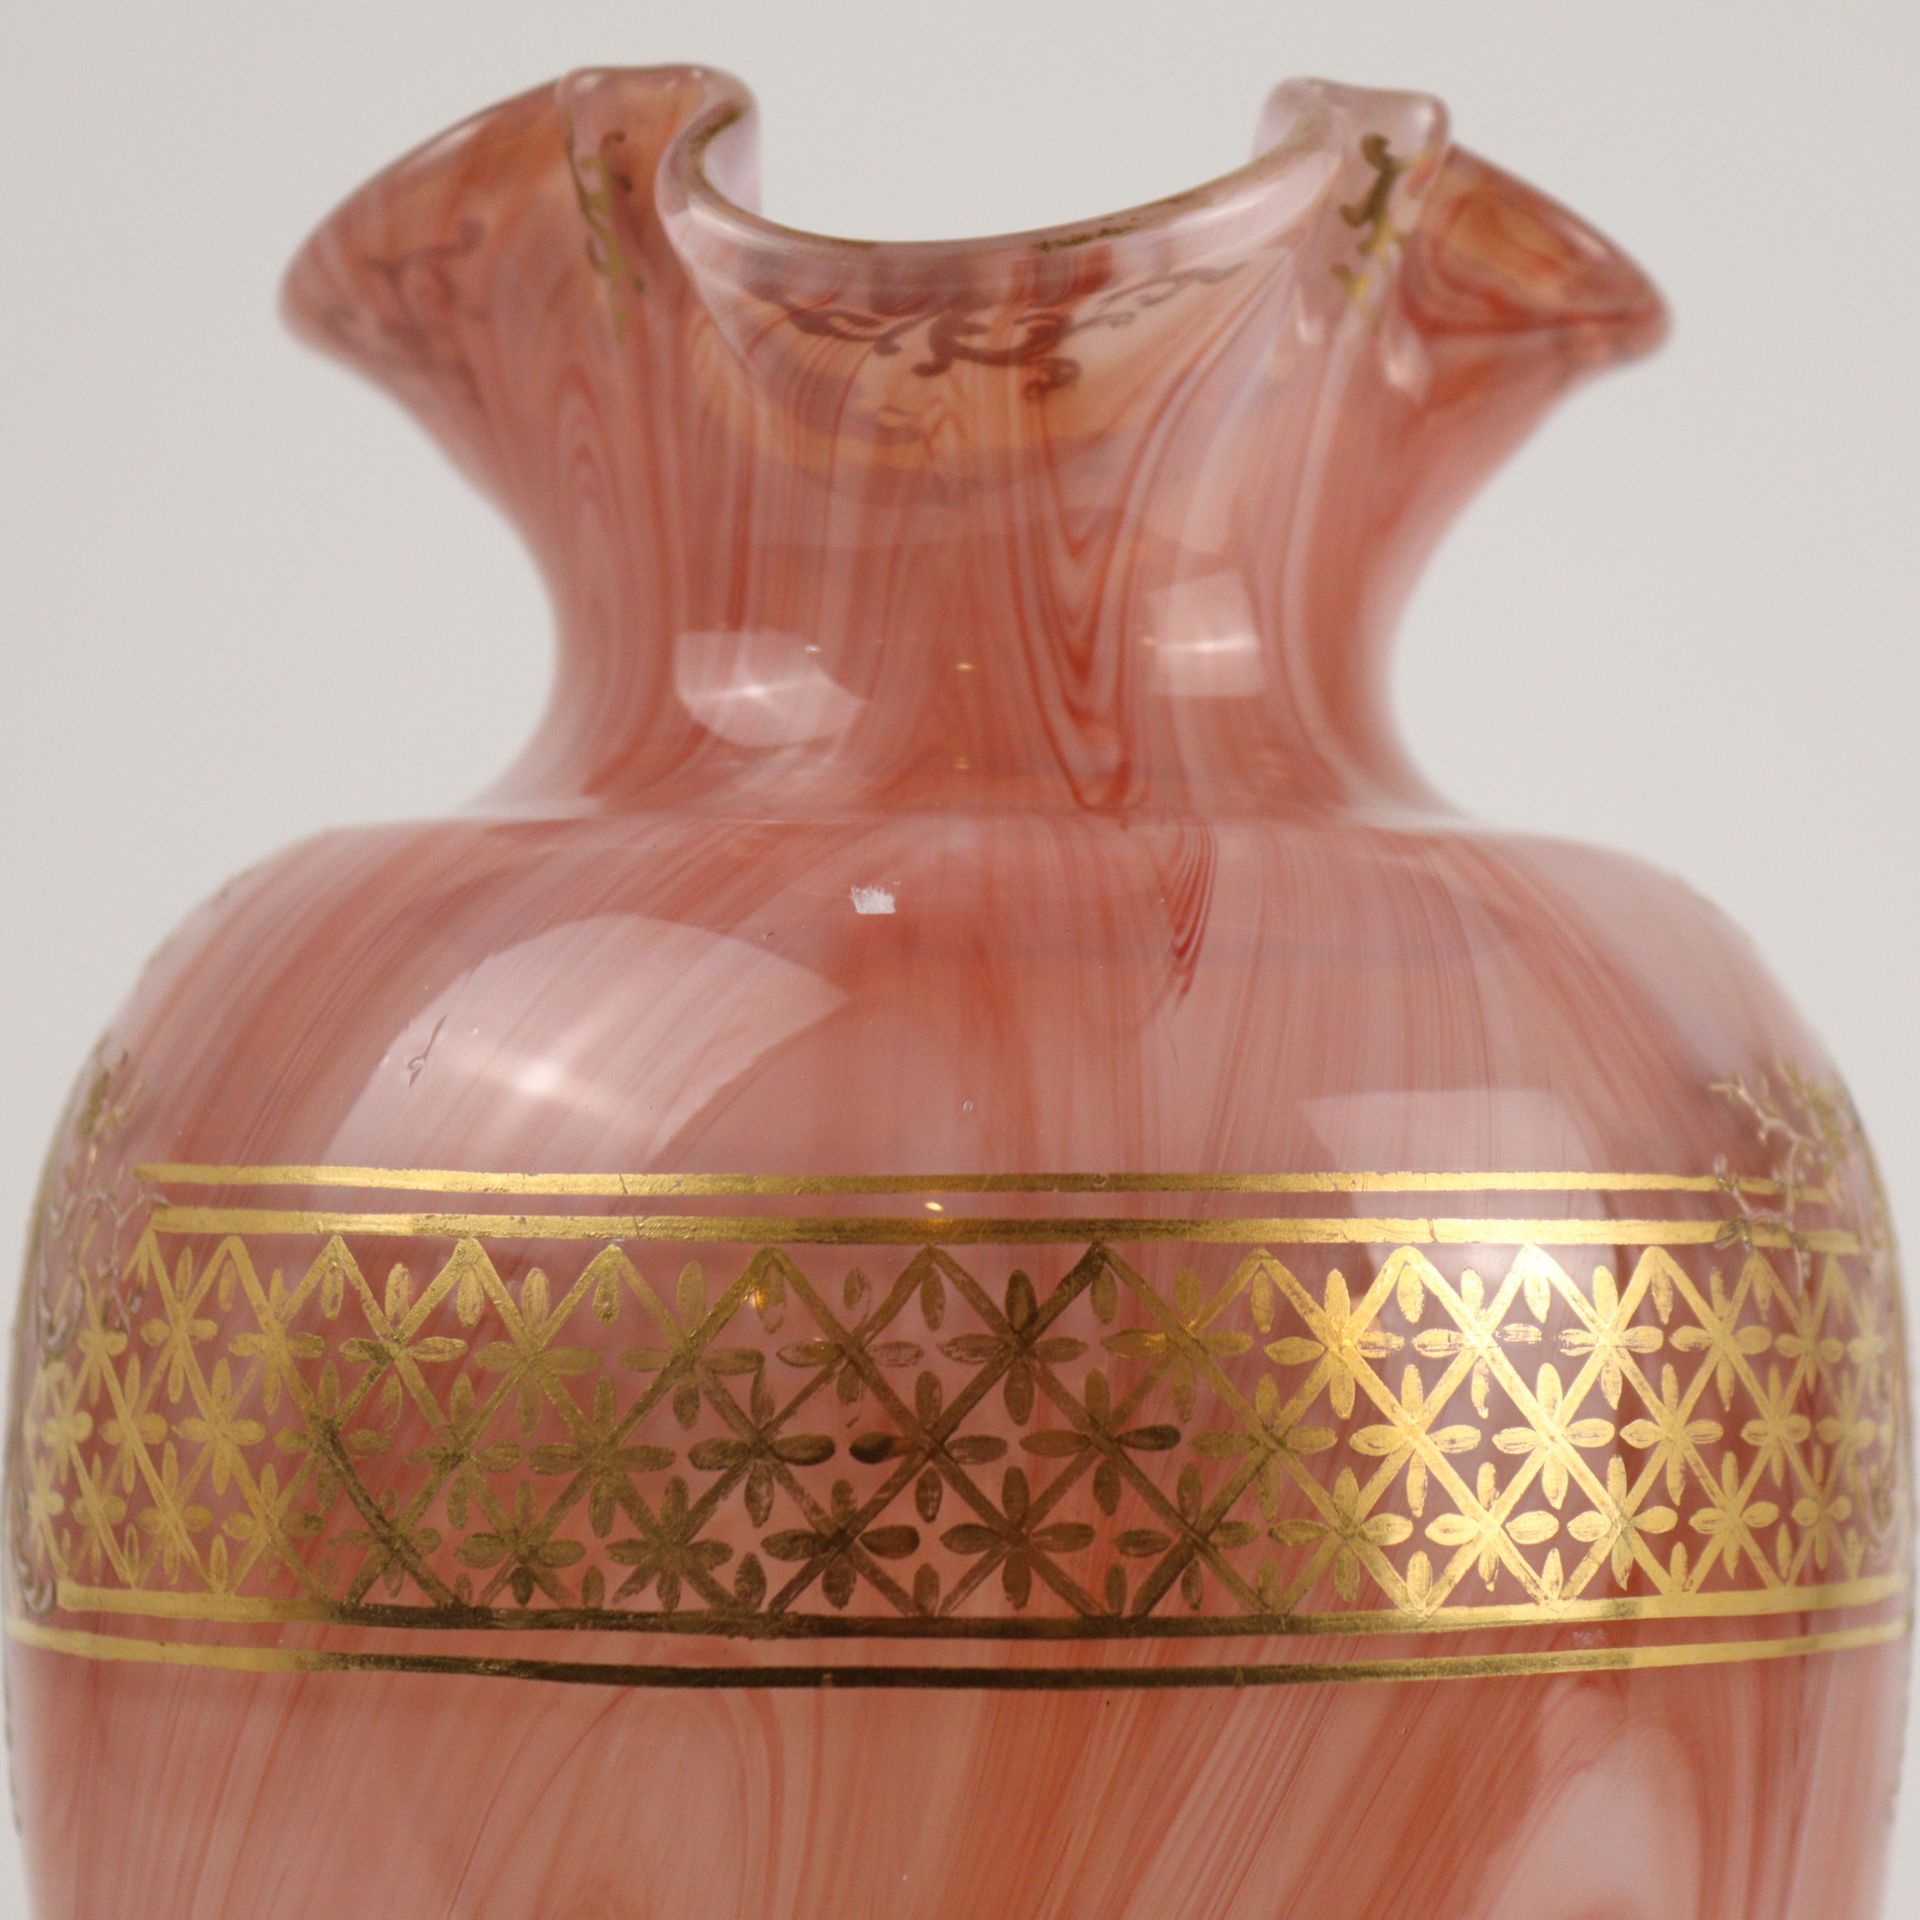 Loetz - Vase 'Karneol' - Image 3 of 5